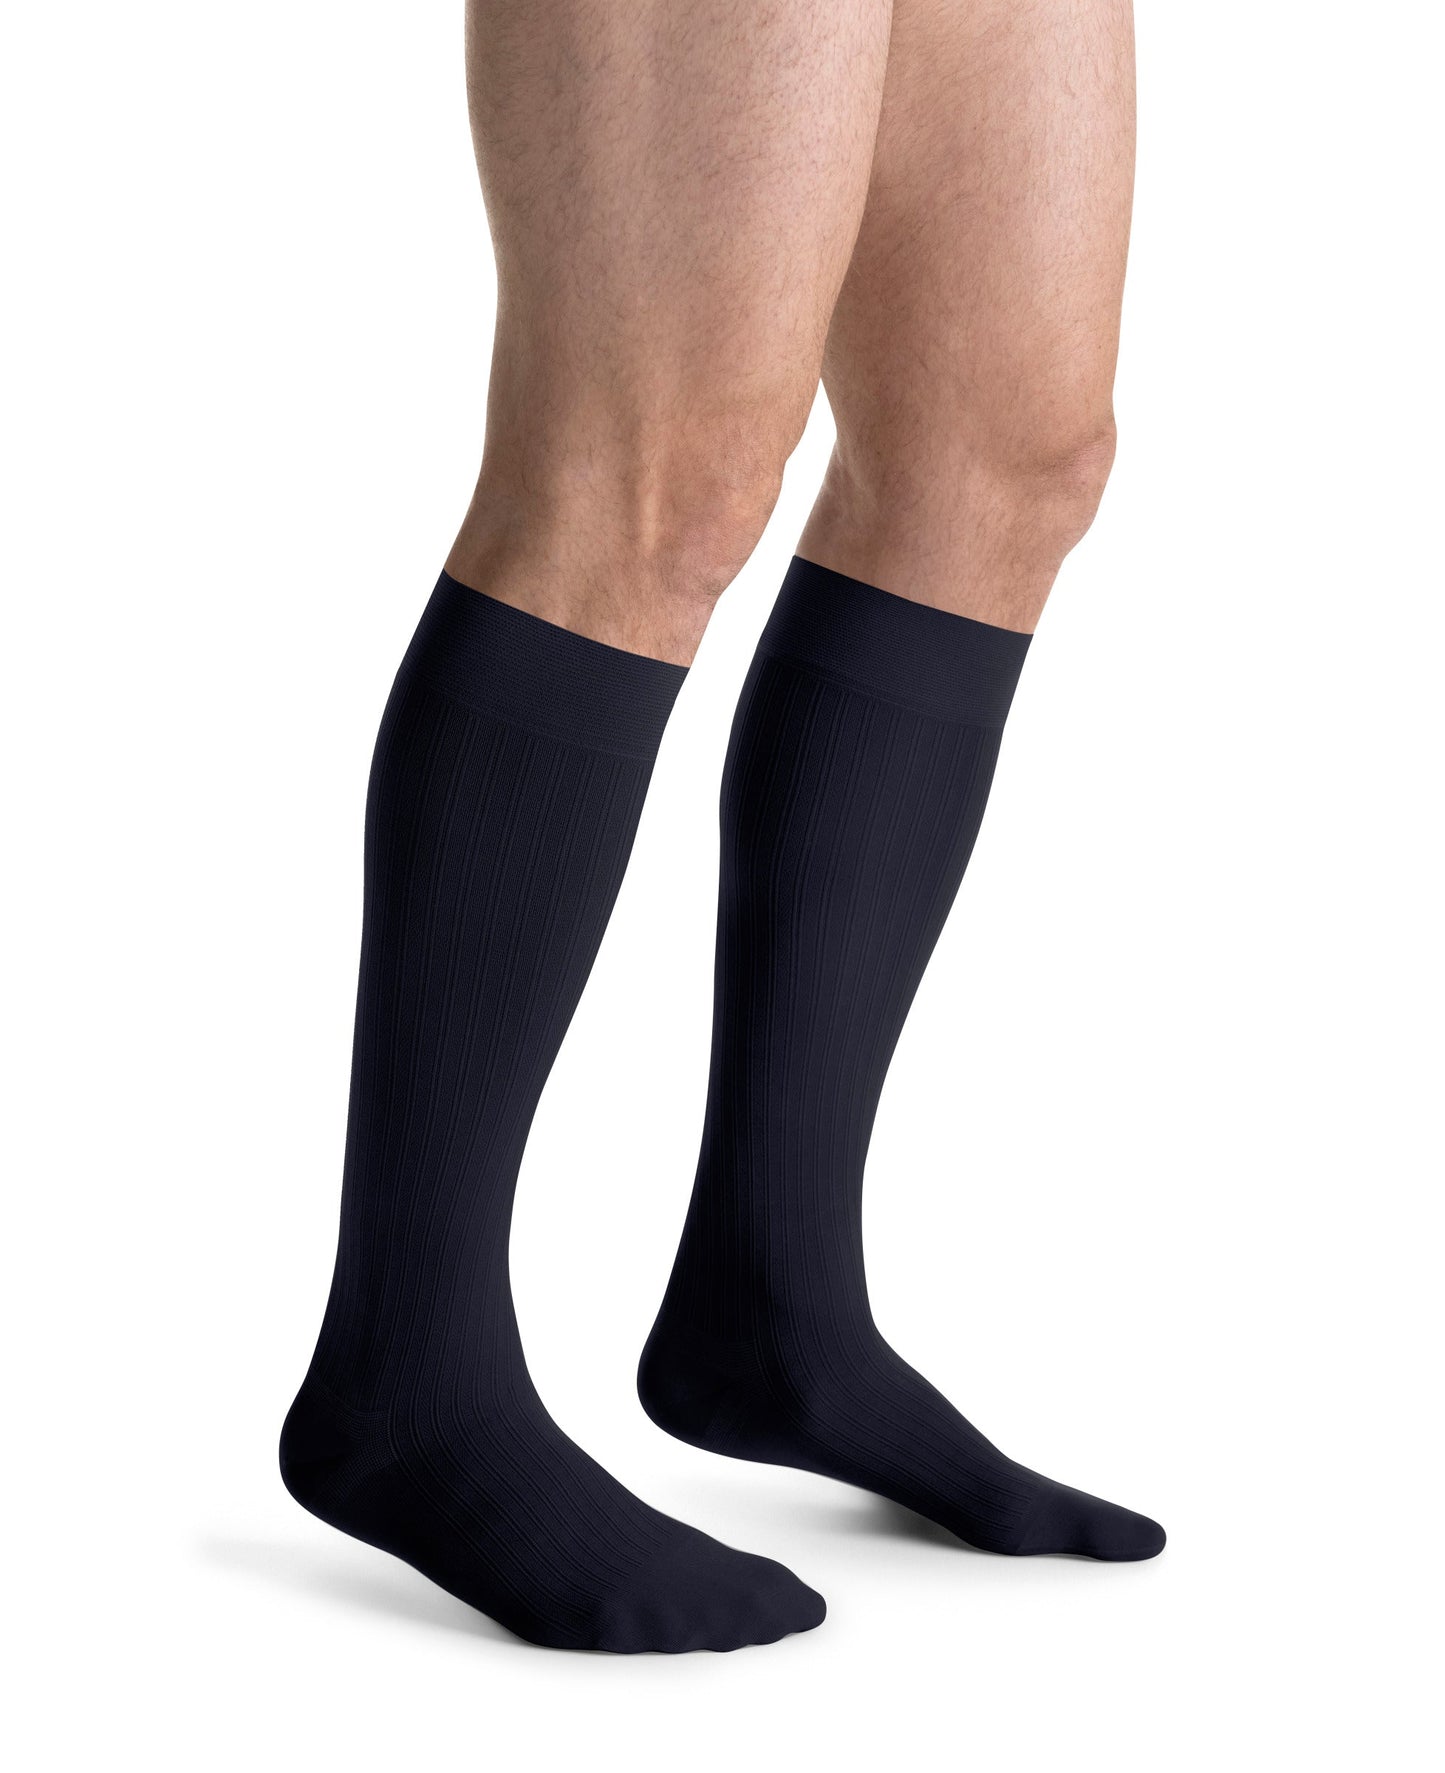 JOBST forMen Ambition Compression Socks 30-40 mmHg Knee High SoftFit Closed Toe Long